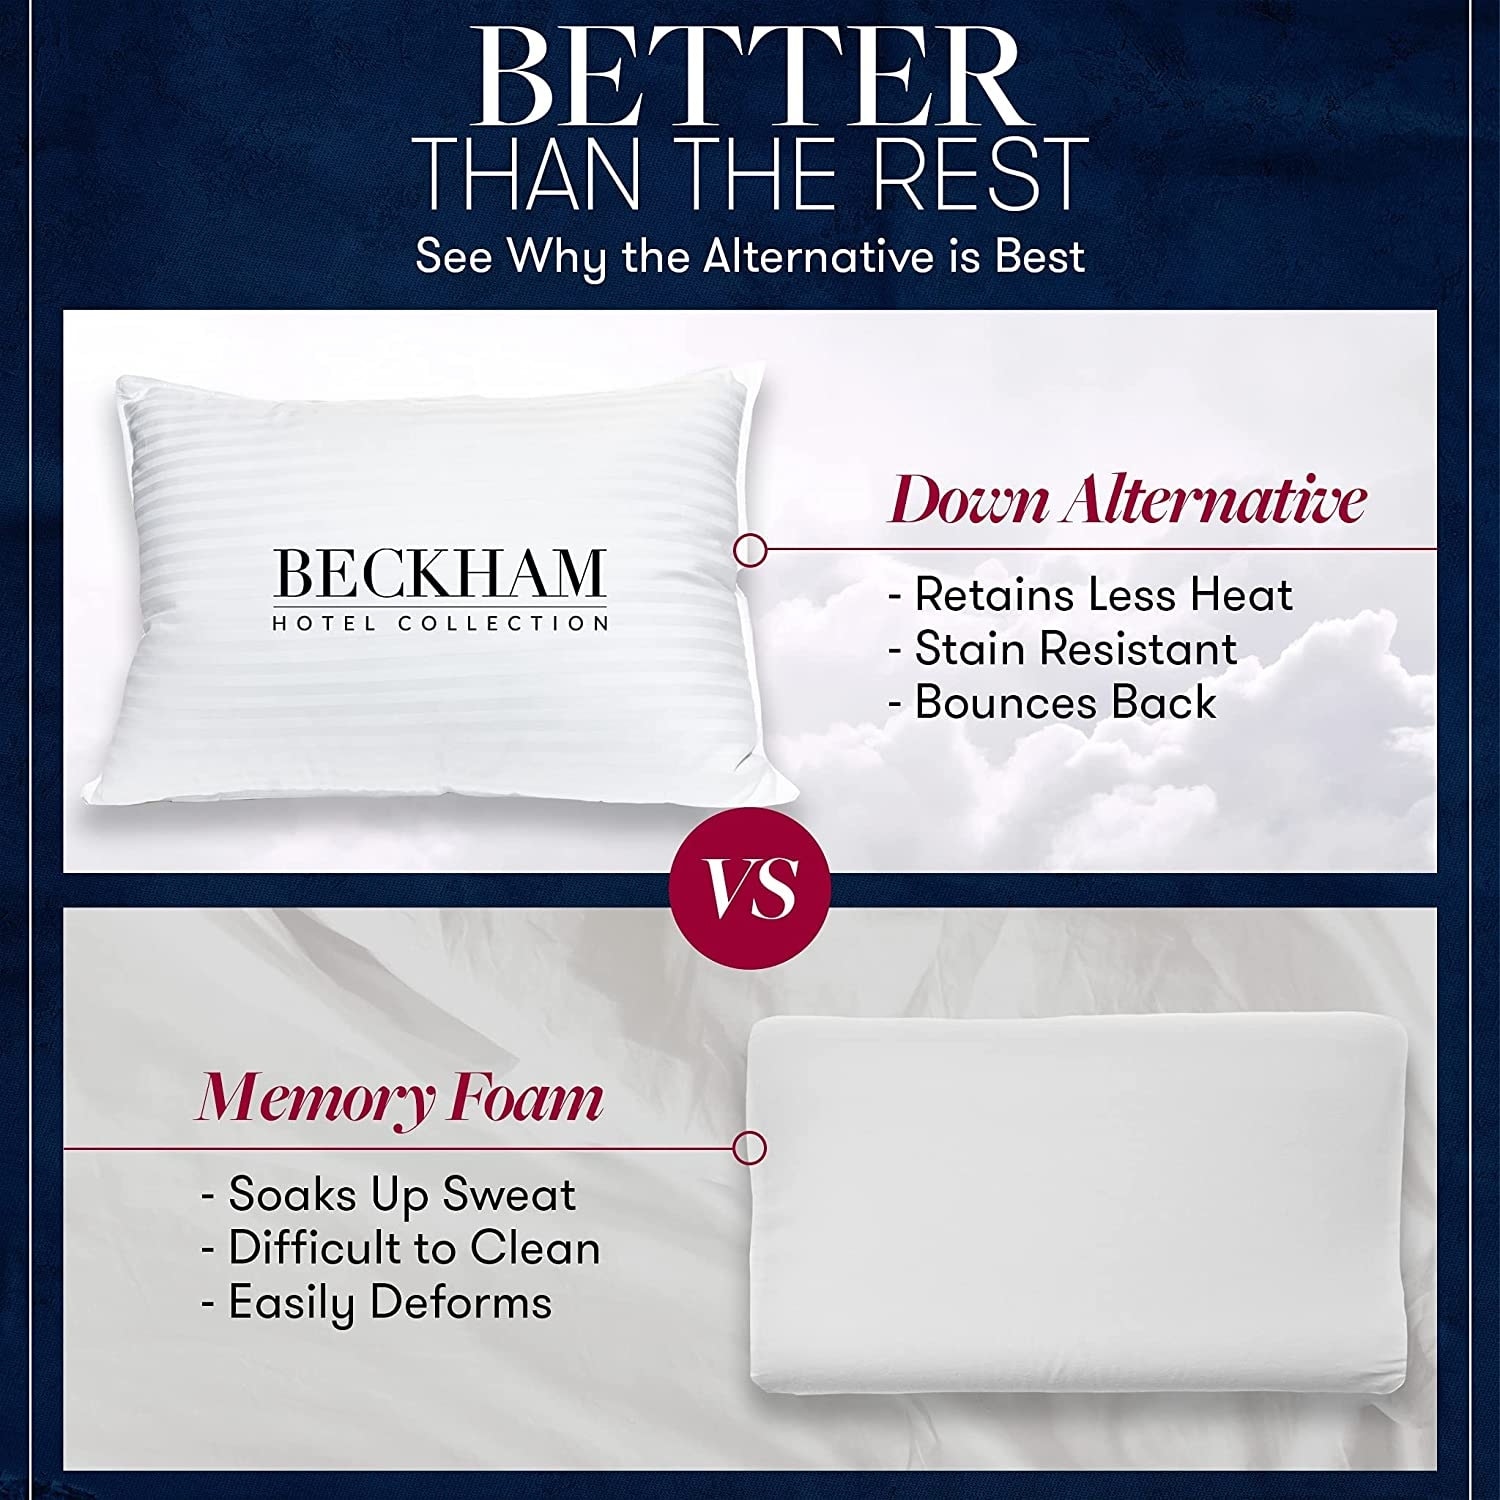 Beckman Hotel Collection Pillow Review - Start Sleeping